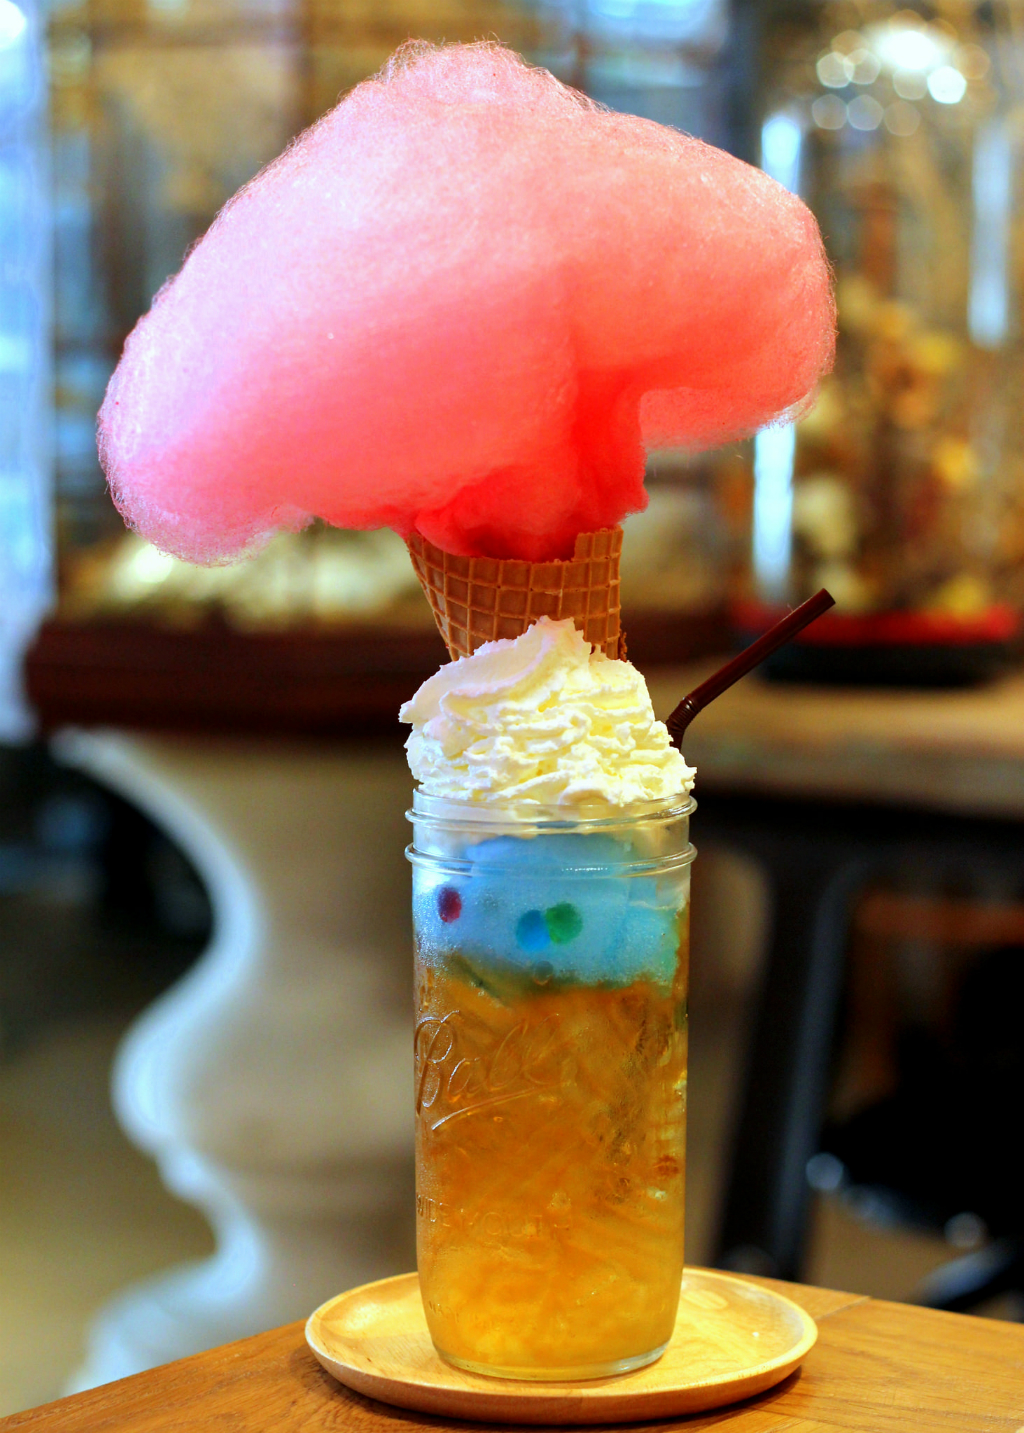 Bangkok Dessert: Once Social Bar and Cafe's Einstein-looking Explosion beverages